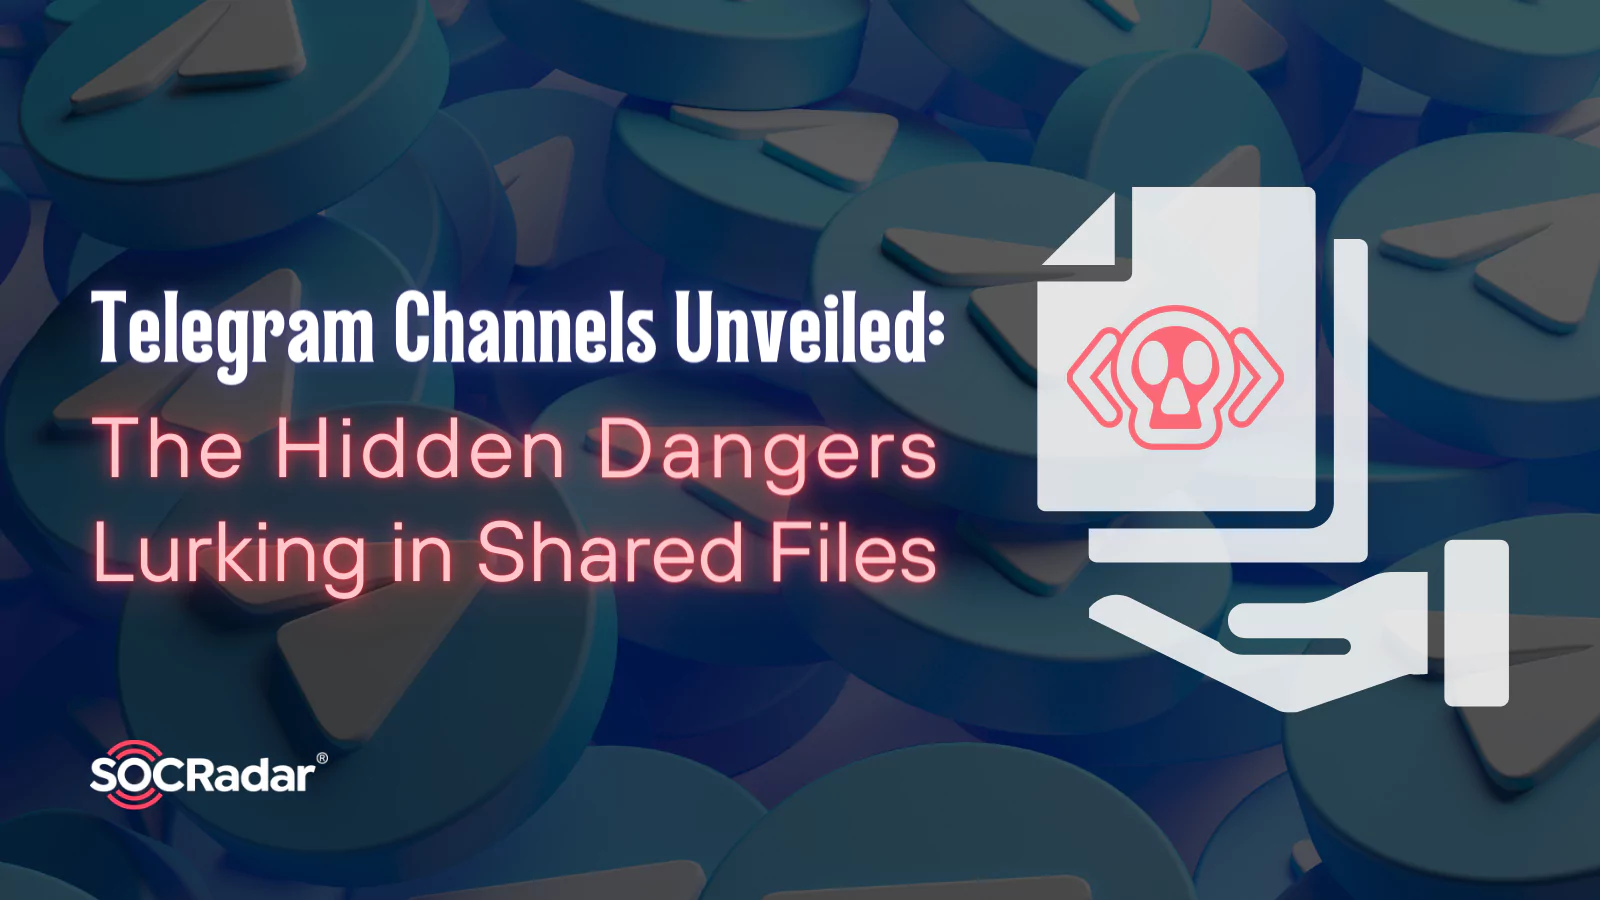 SOCRadar® Cyber Intelligence Inc. | Telegram Channels Unveiled: The Hidden Dangers Lurking in Shared Files